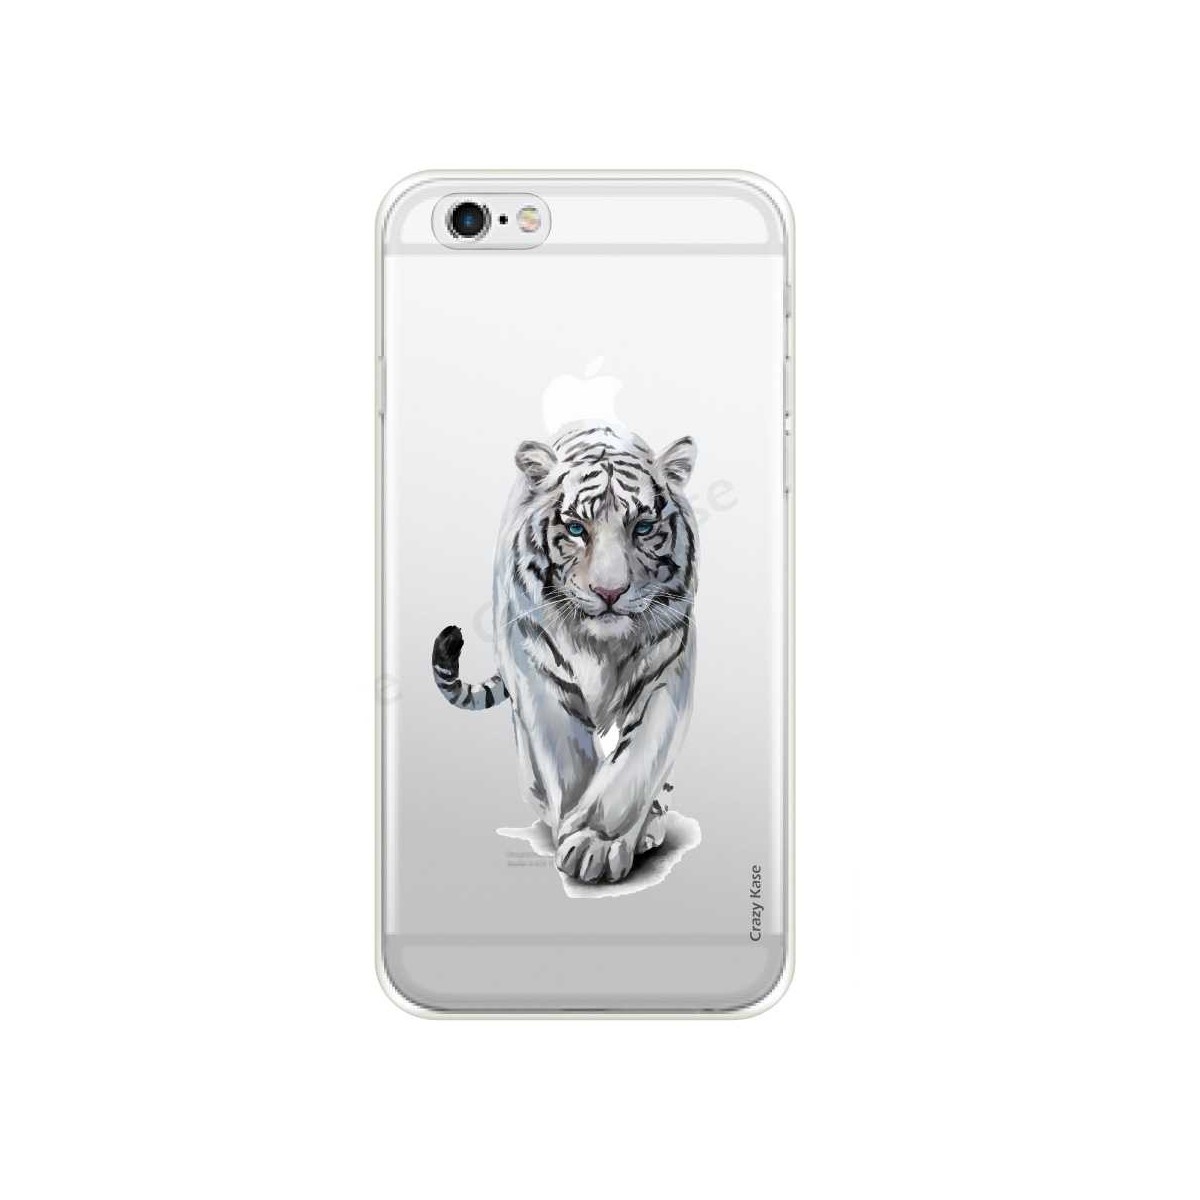 Coque iPhone 6 / 6s souple Tigre blanc - Crazy Kase